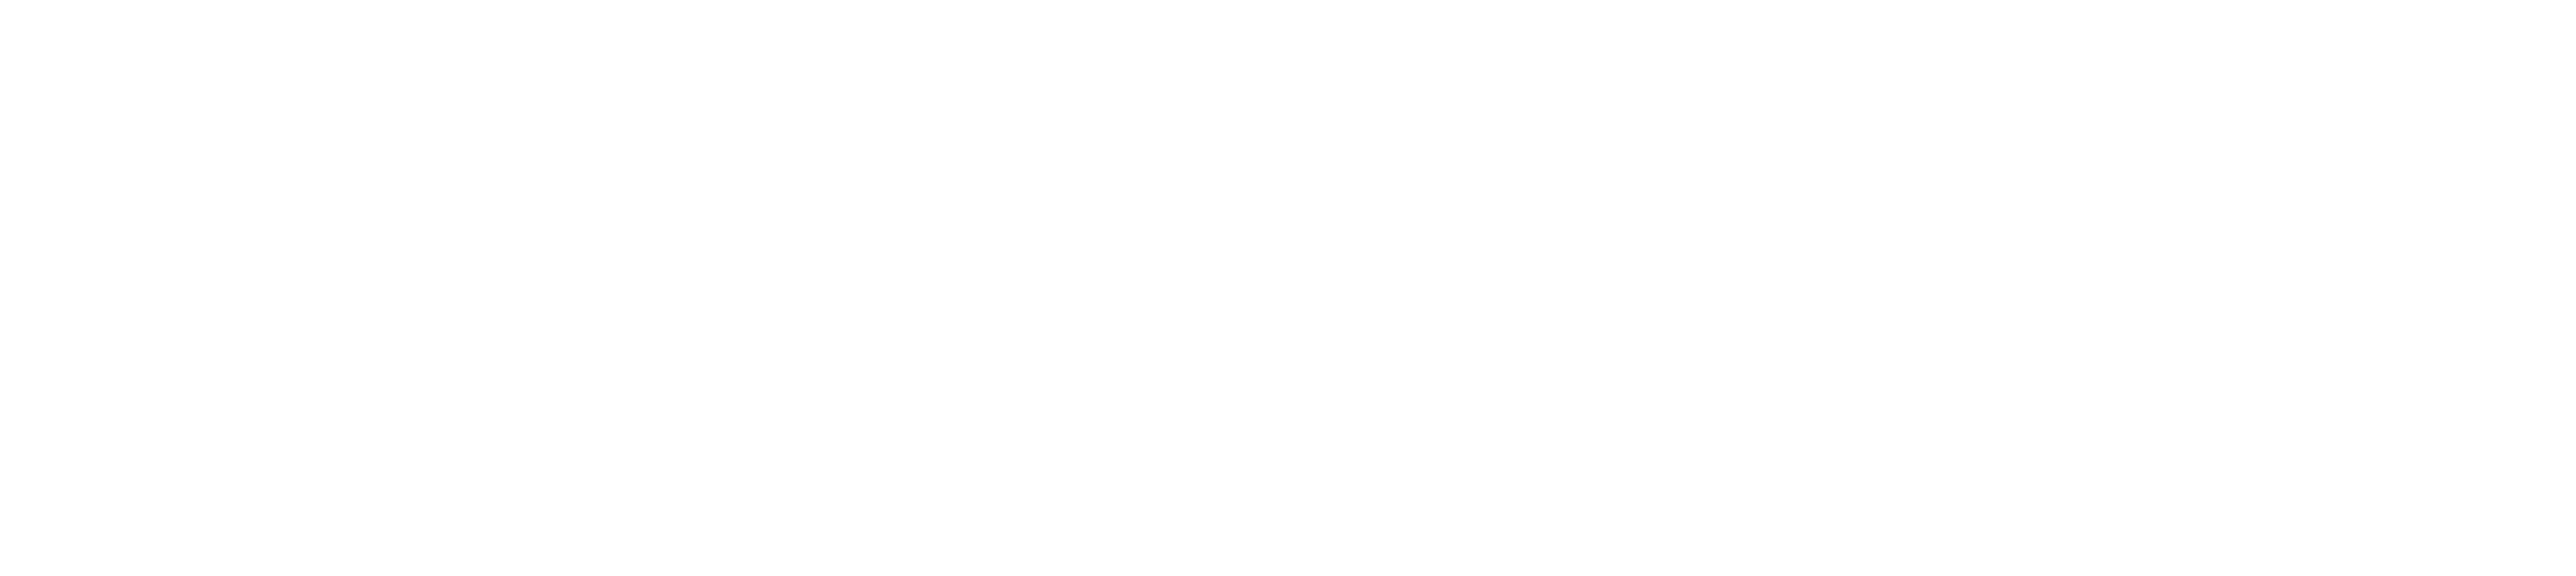 Tricolor Foundation logo